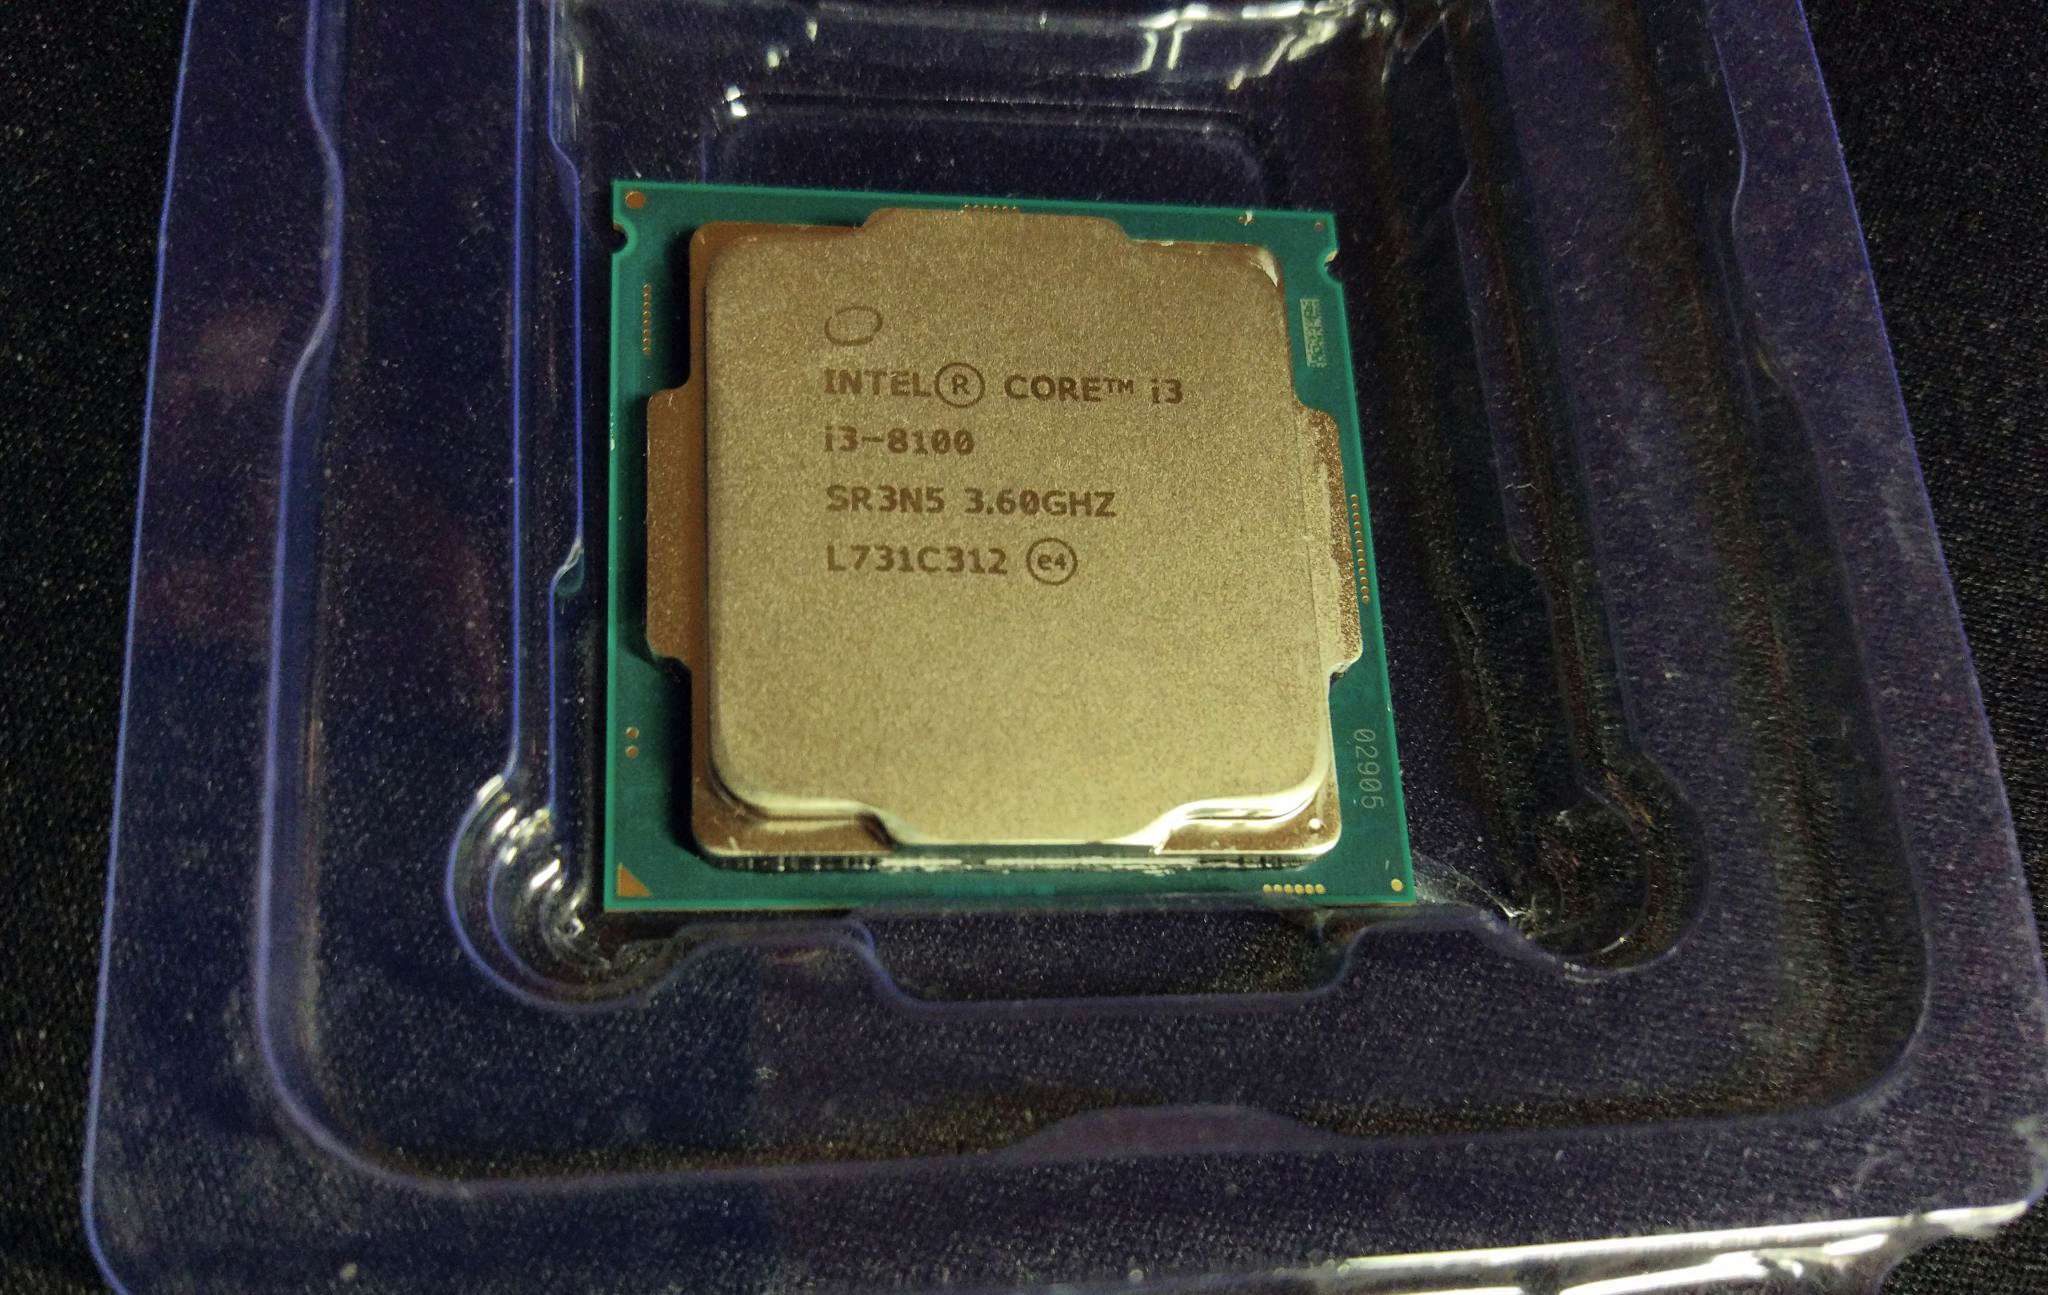 Intel r core tm купить. Intel Core i3 8100, LGA 1151v2, OEM. Intel Core i3-8100 lga1151. Intel Core i3-8100 lga1151 v2, 4 x 3600 МГЦ. Процессор Intel(r) Core(TM) i3.